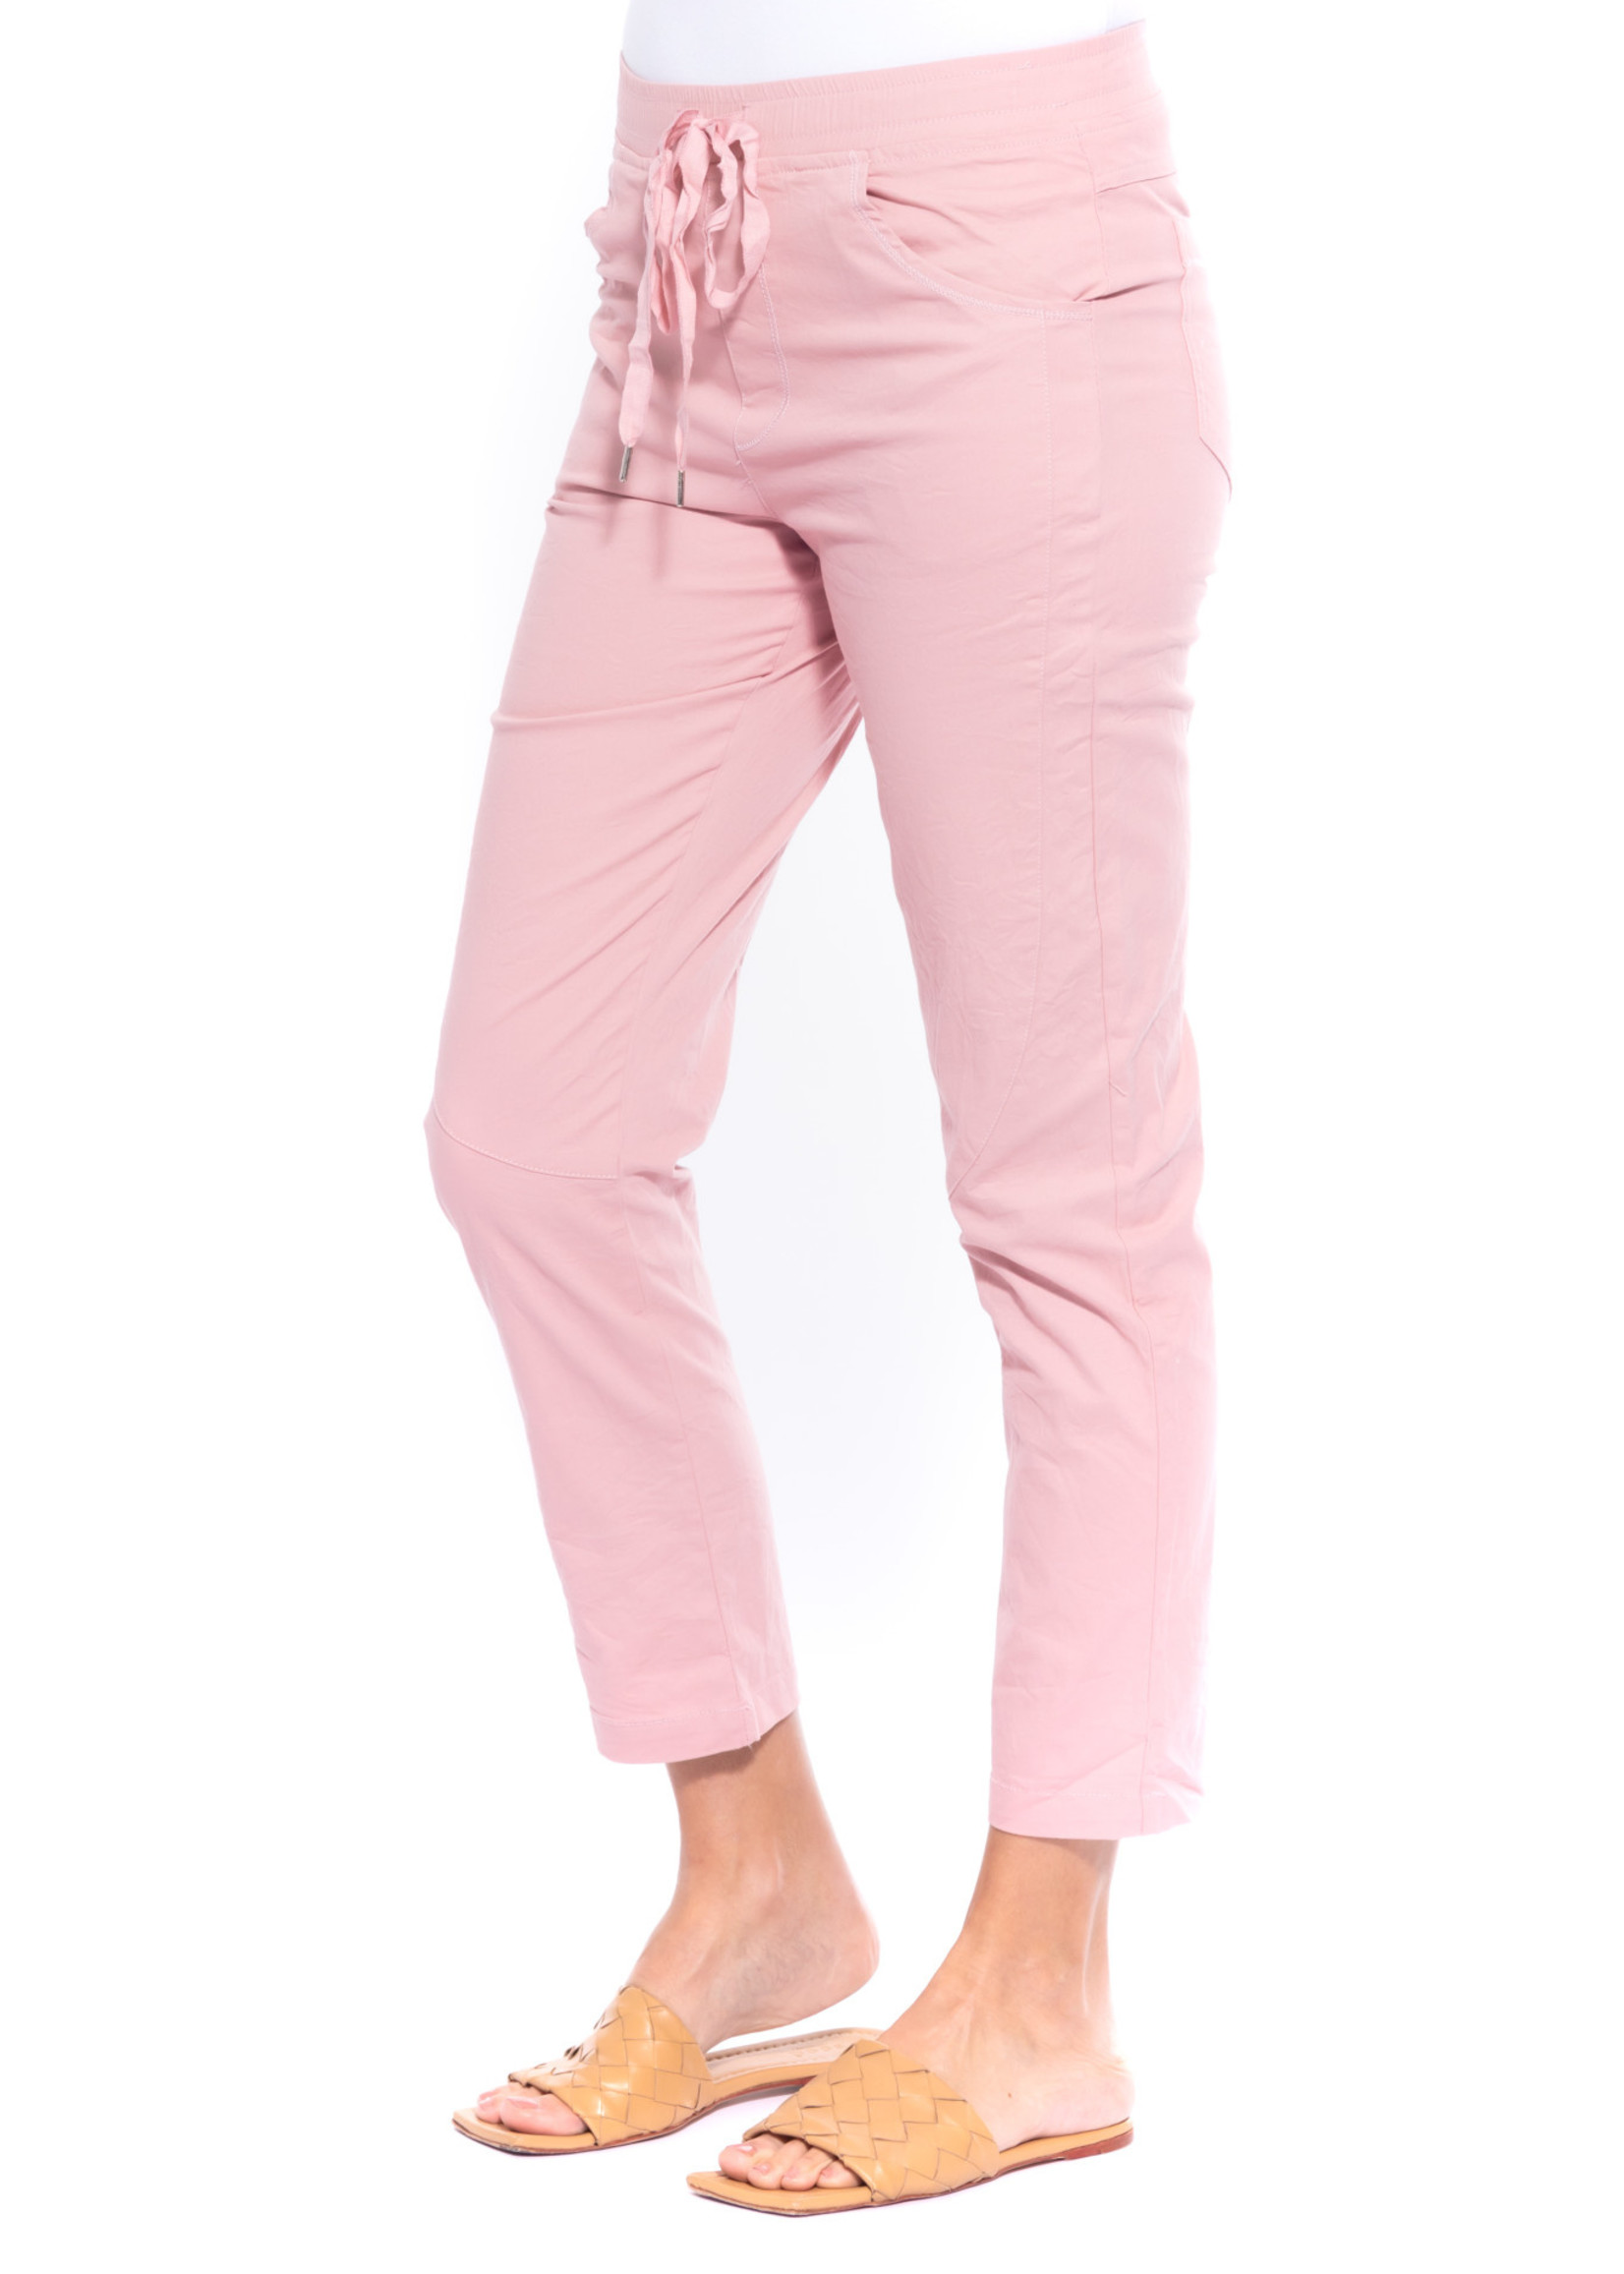 Cafe Latte Musk Pink Stretch Crinkle Cotton Drawstring Pants